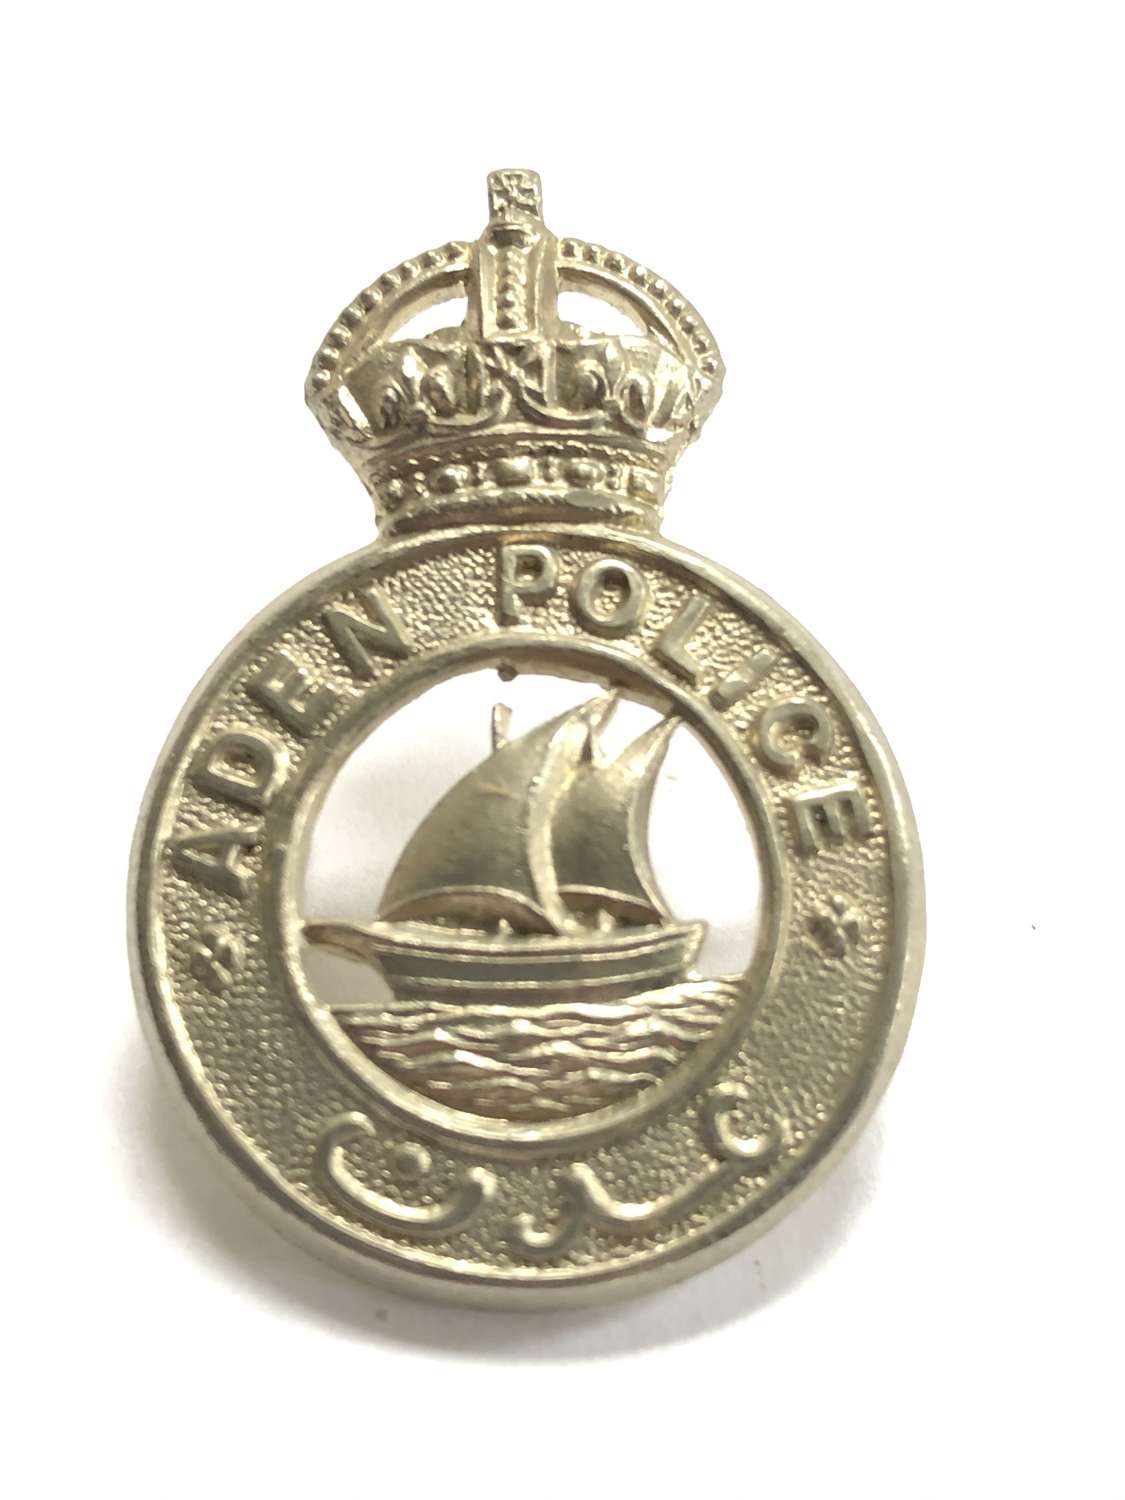 Aden Police pre 1953 cap badge by Firmin, London